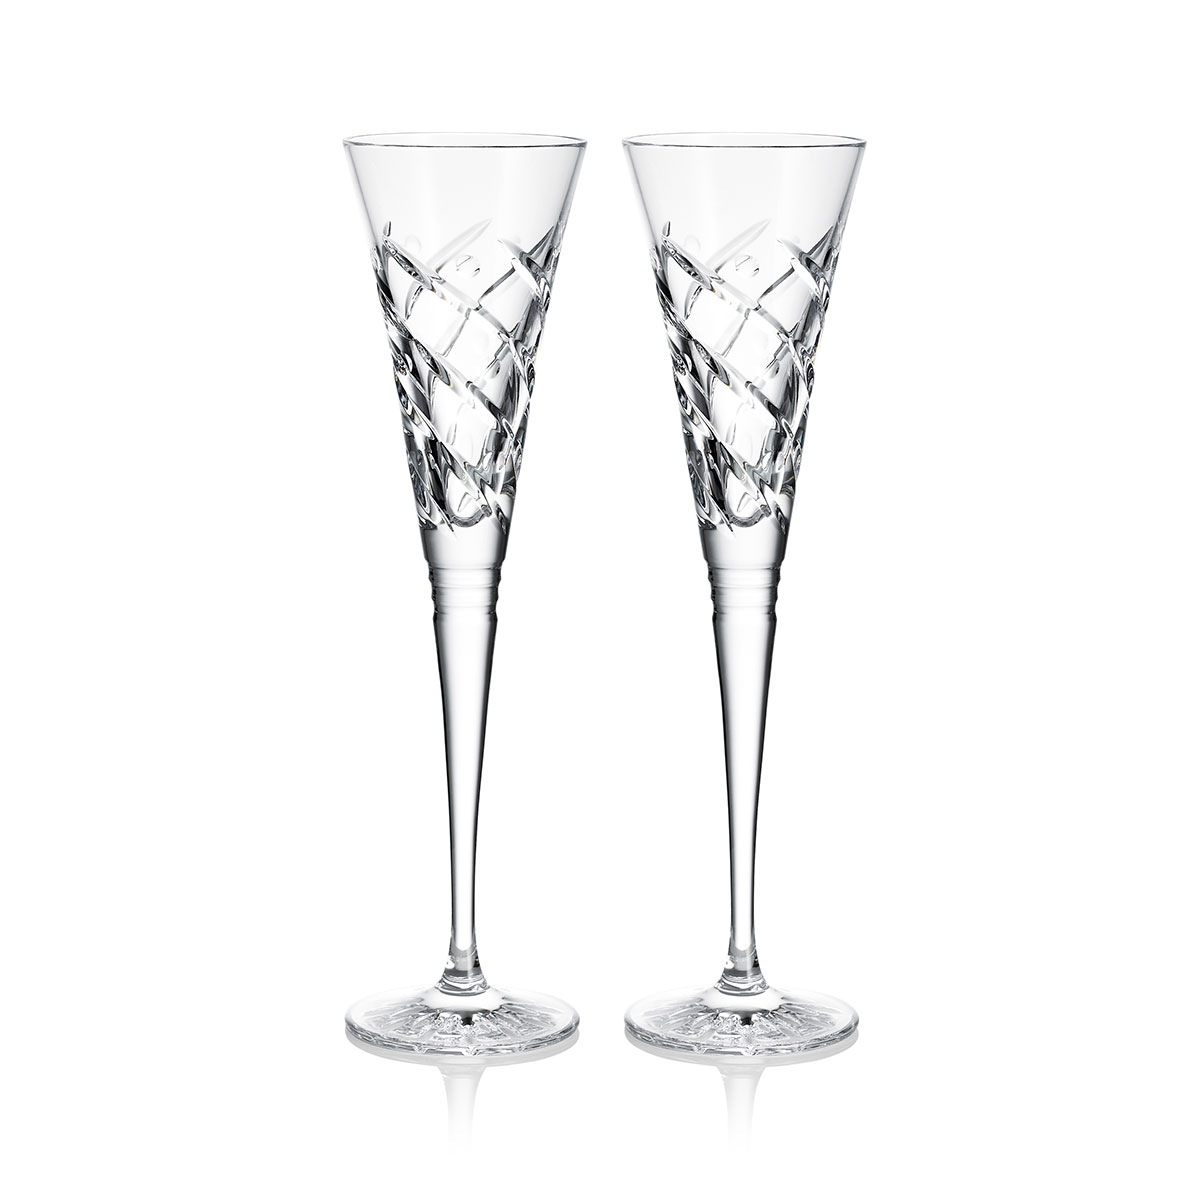 Waterford Winter Wonders Mistletoe Flute Champagne Glasses, Pair